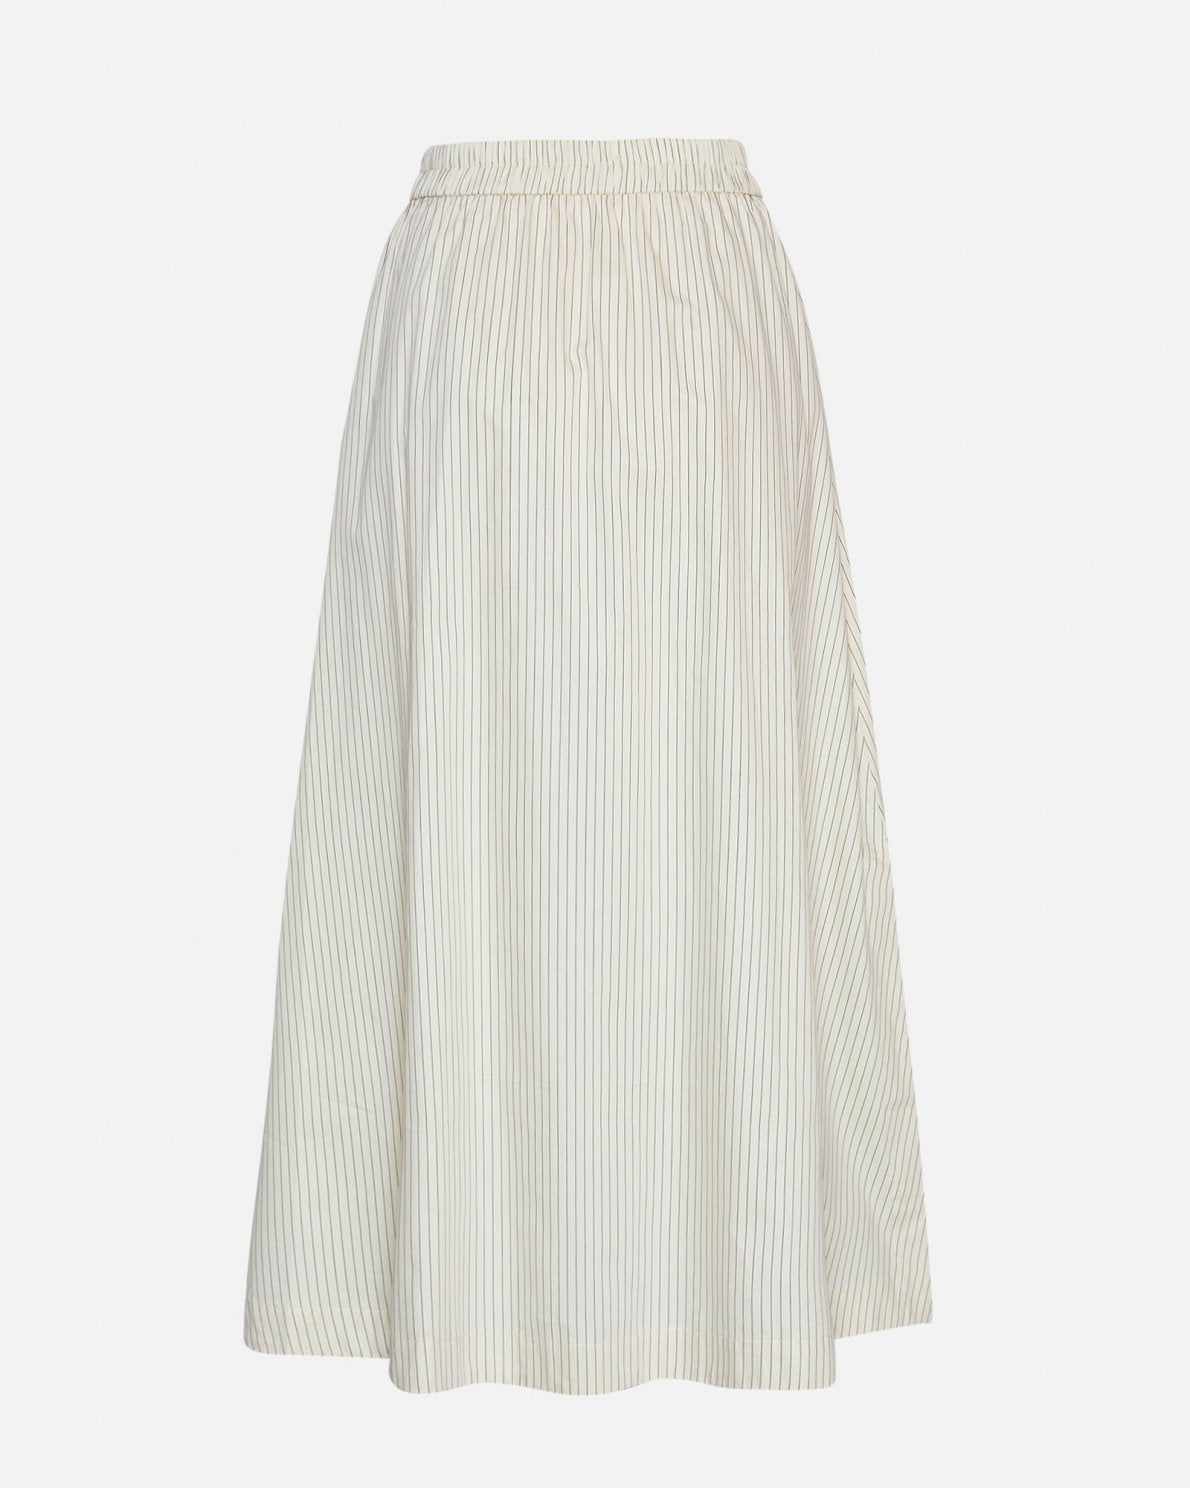 Wilhelmina Stripe Skirt